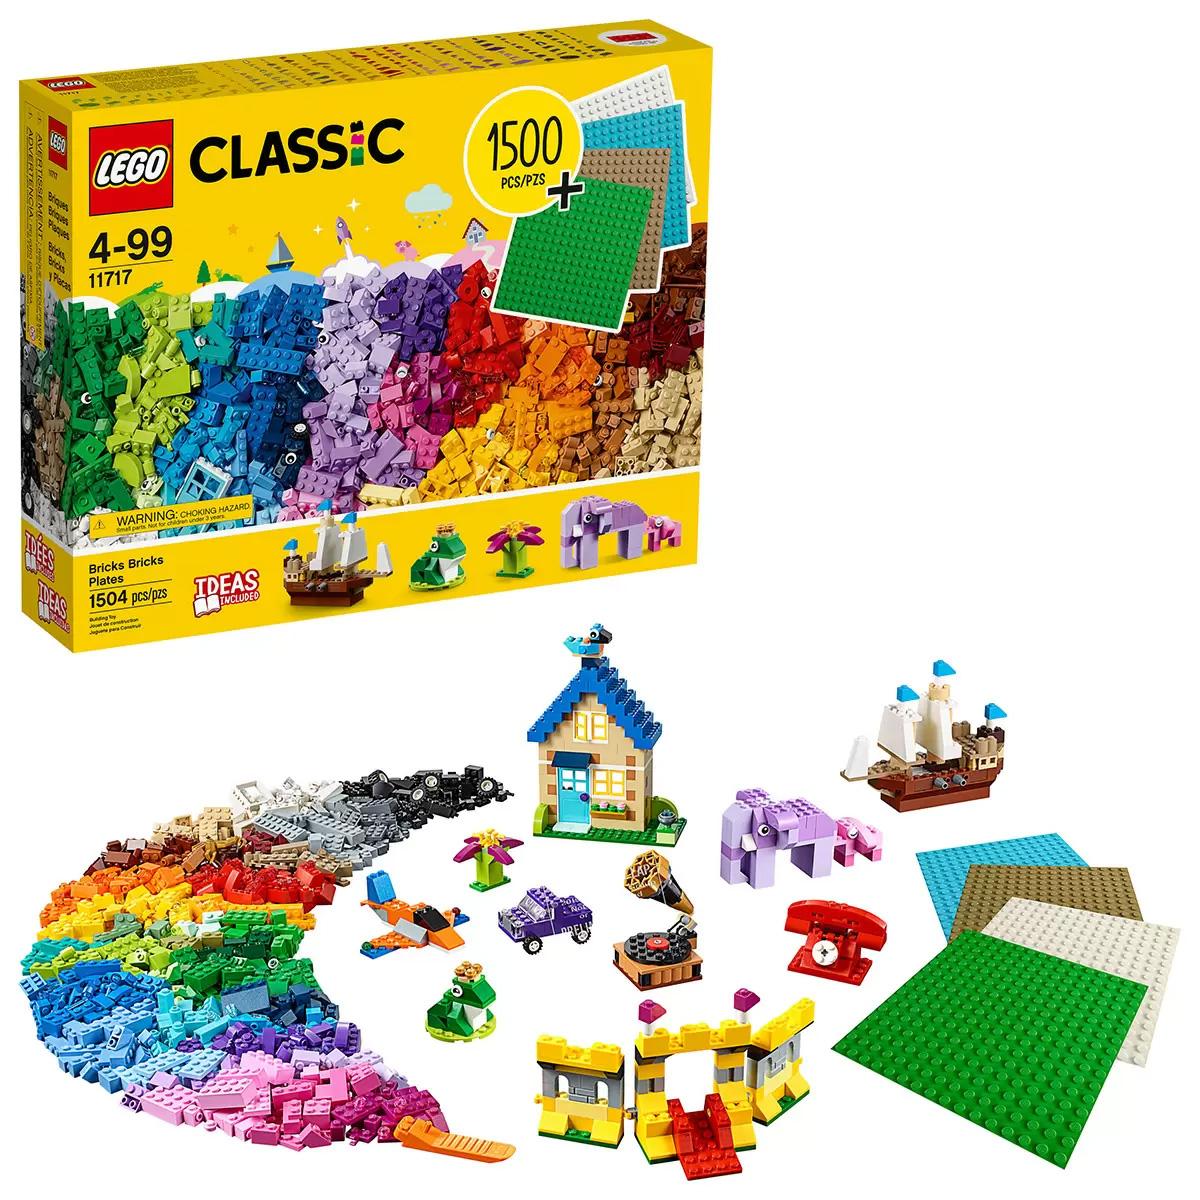 1504-Piece LEGO Classic Bricks Bricks Plates Building Toy for $39.97 Shipped